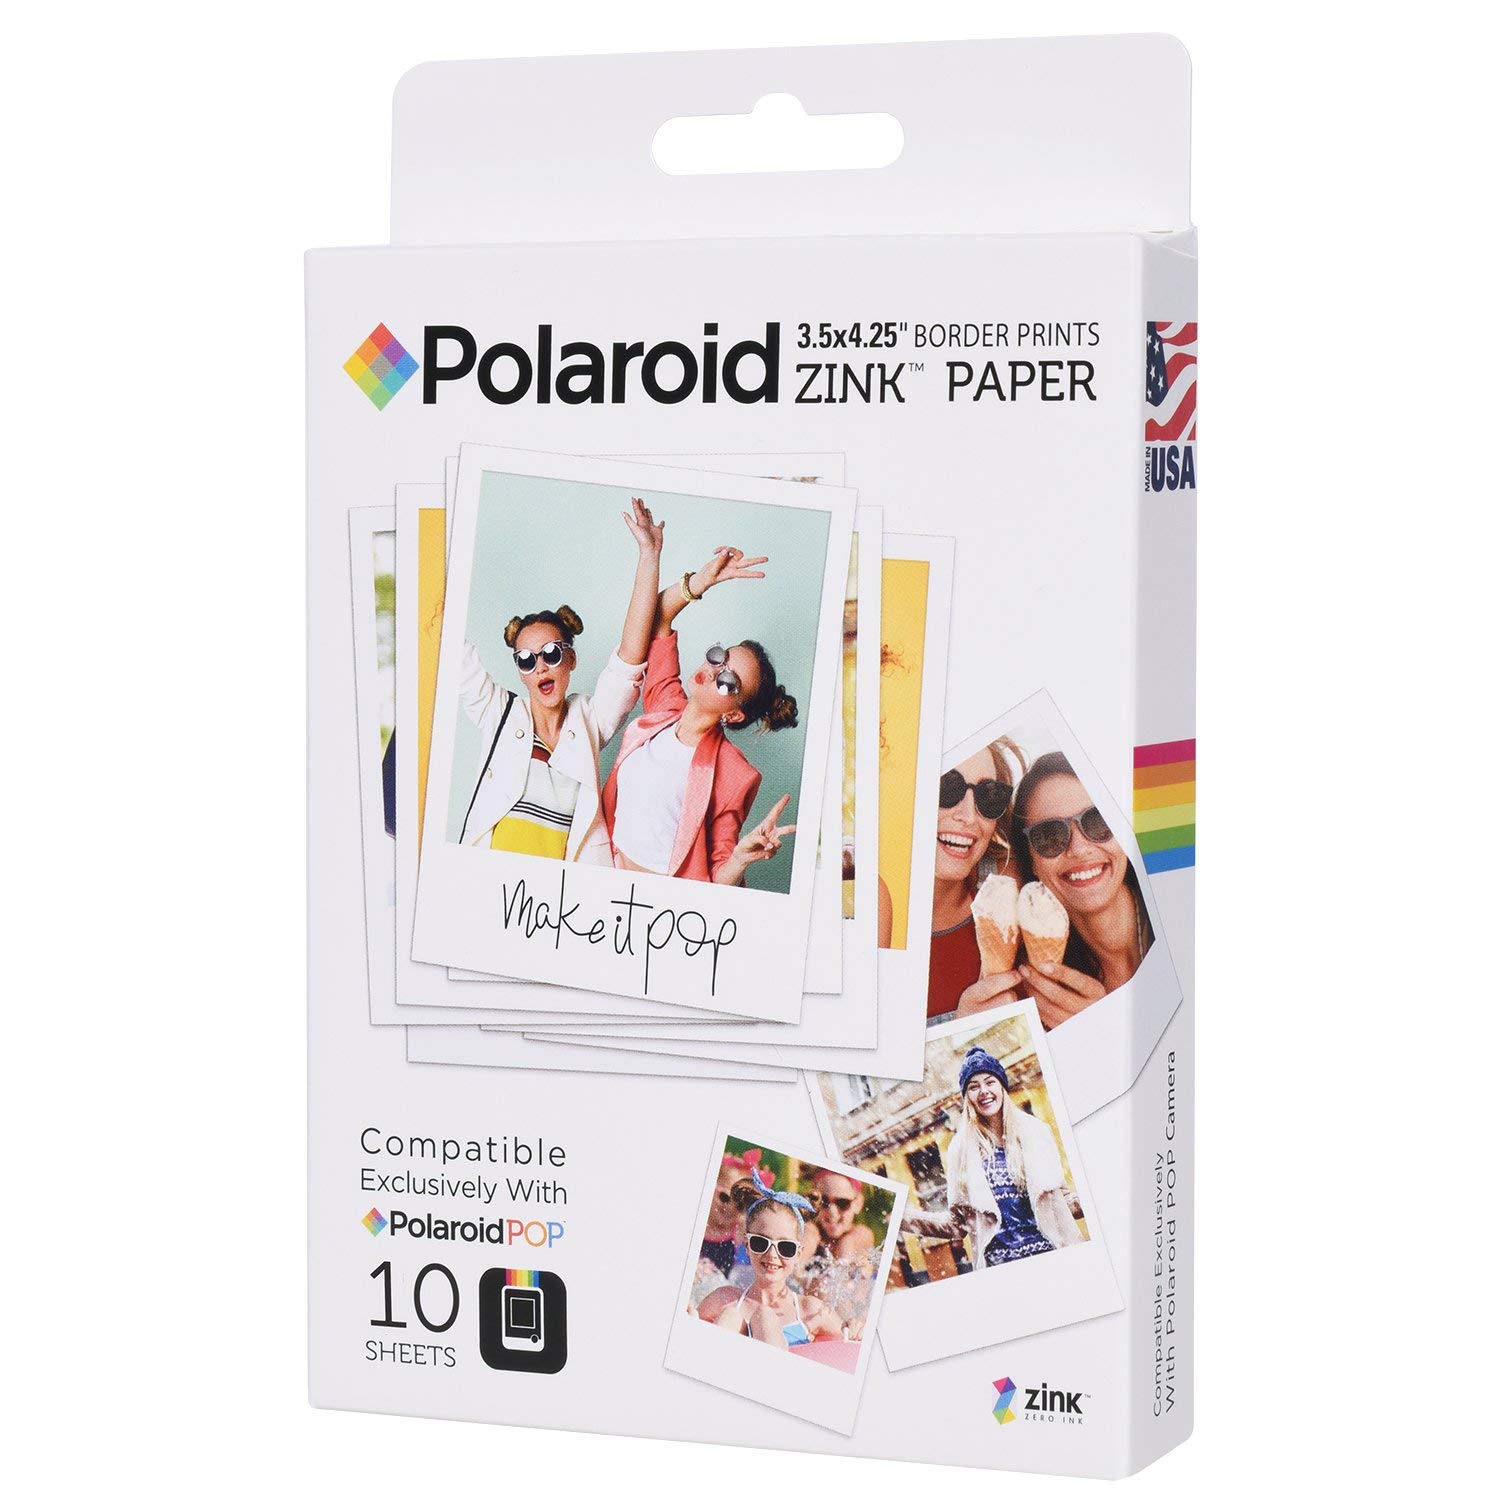 Polaroid pop zink paper